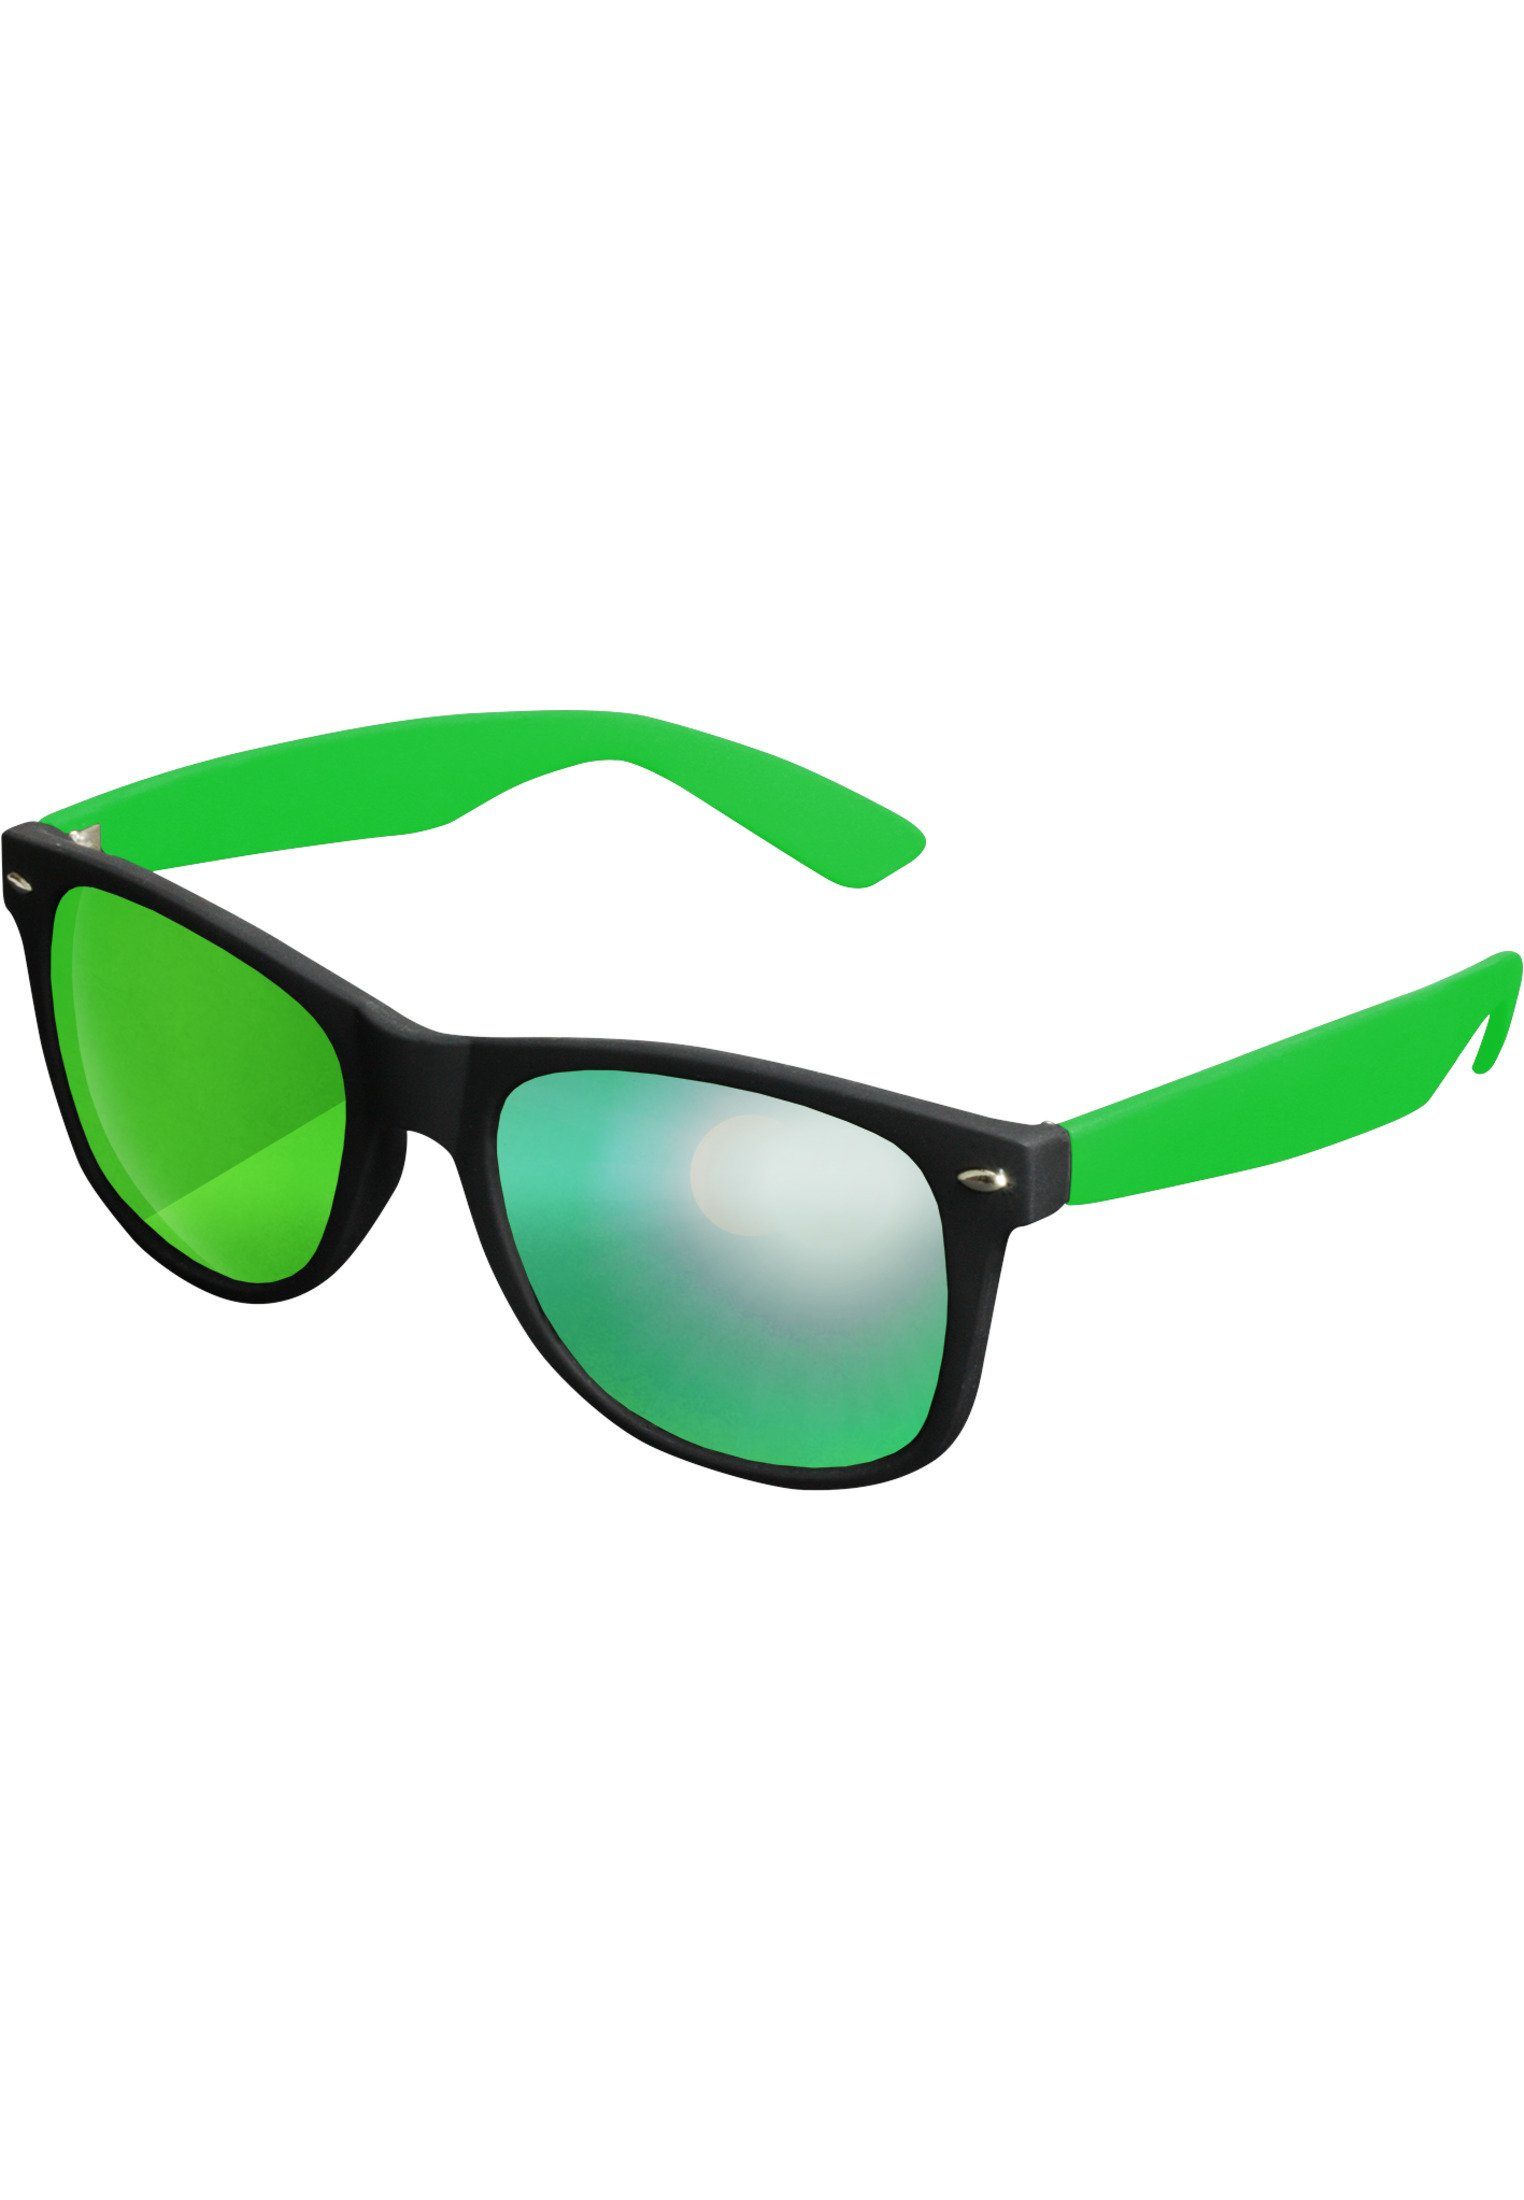 Sunglasses Likoma blk/lgr Sonnenbrille Accessoires Mirror MSTRDS